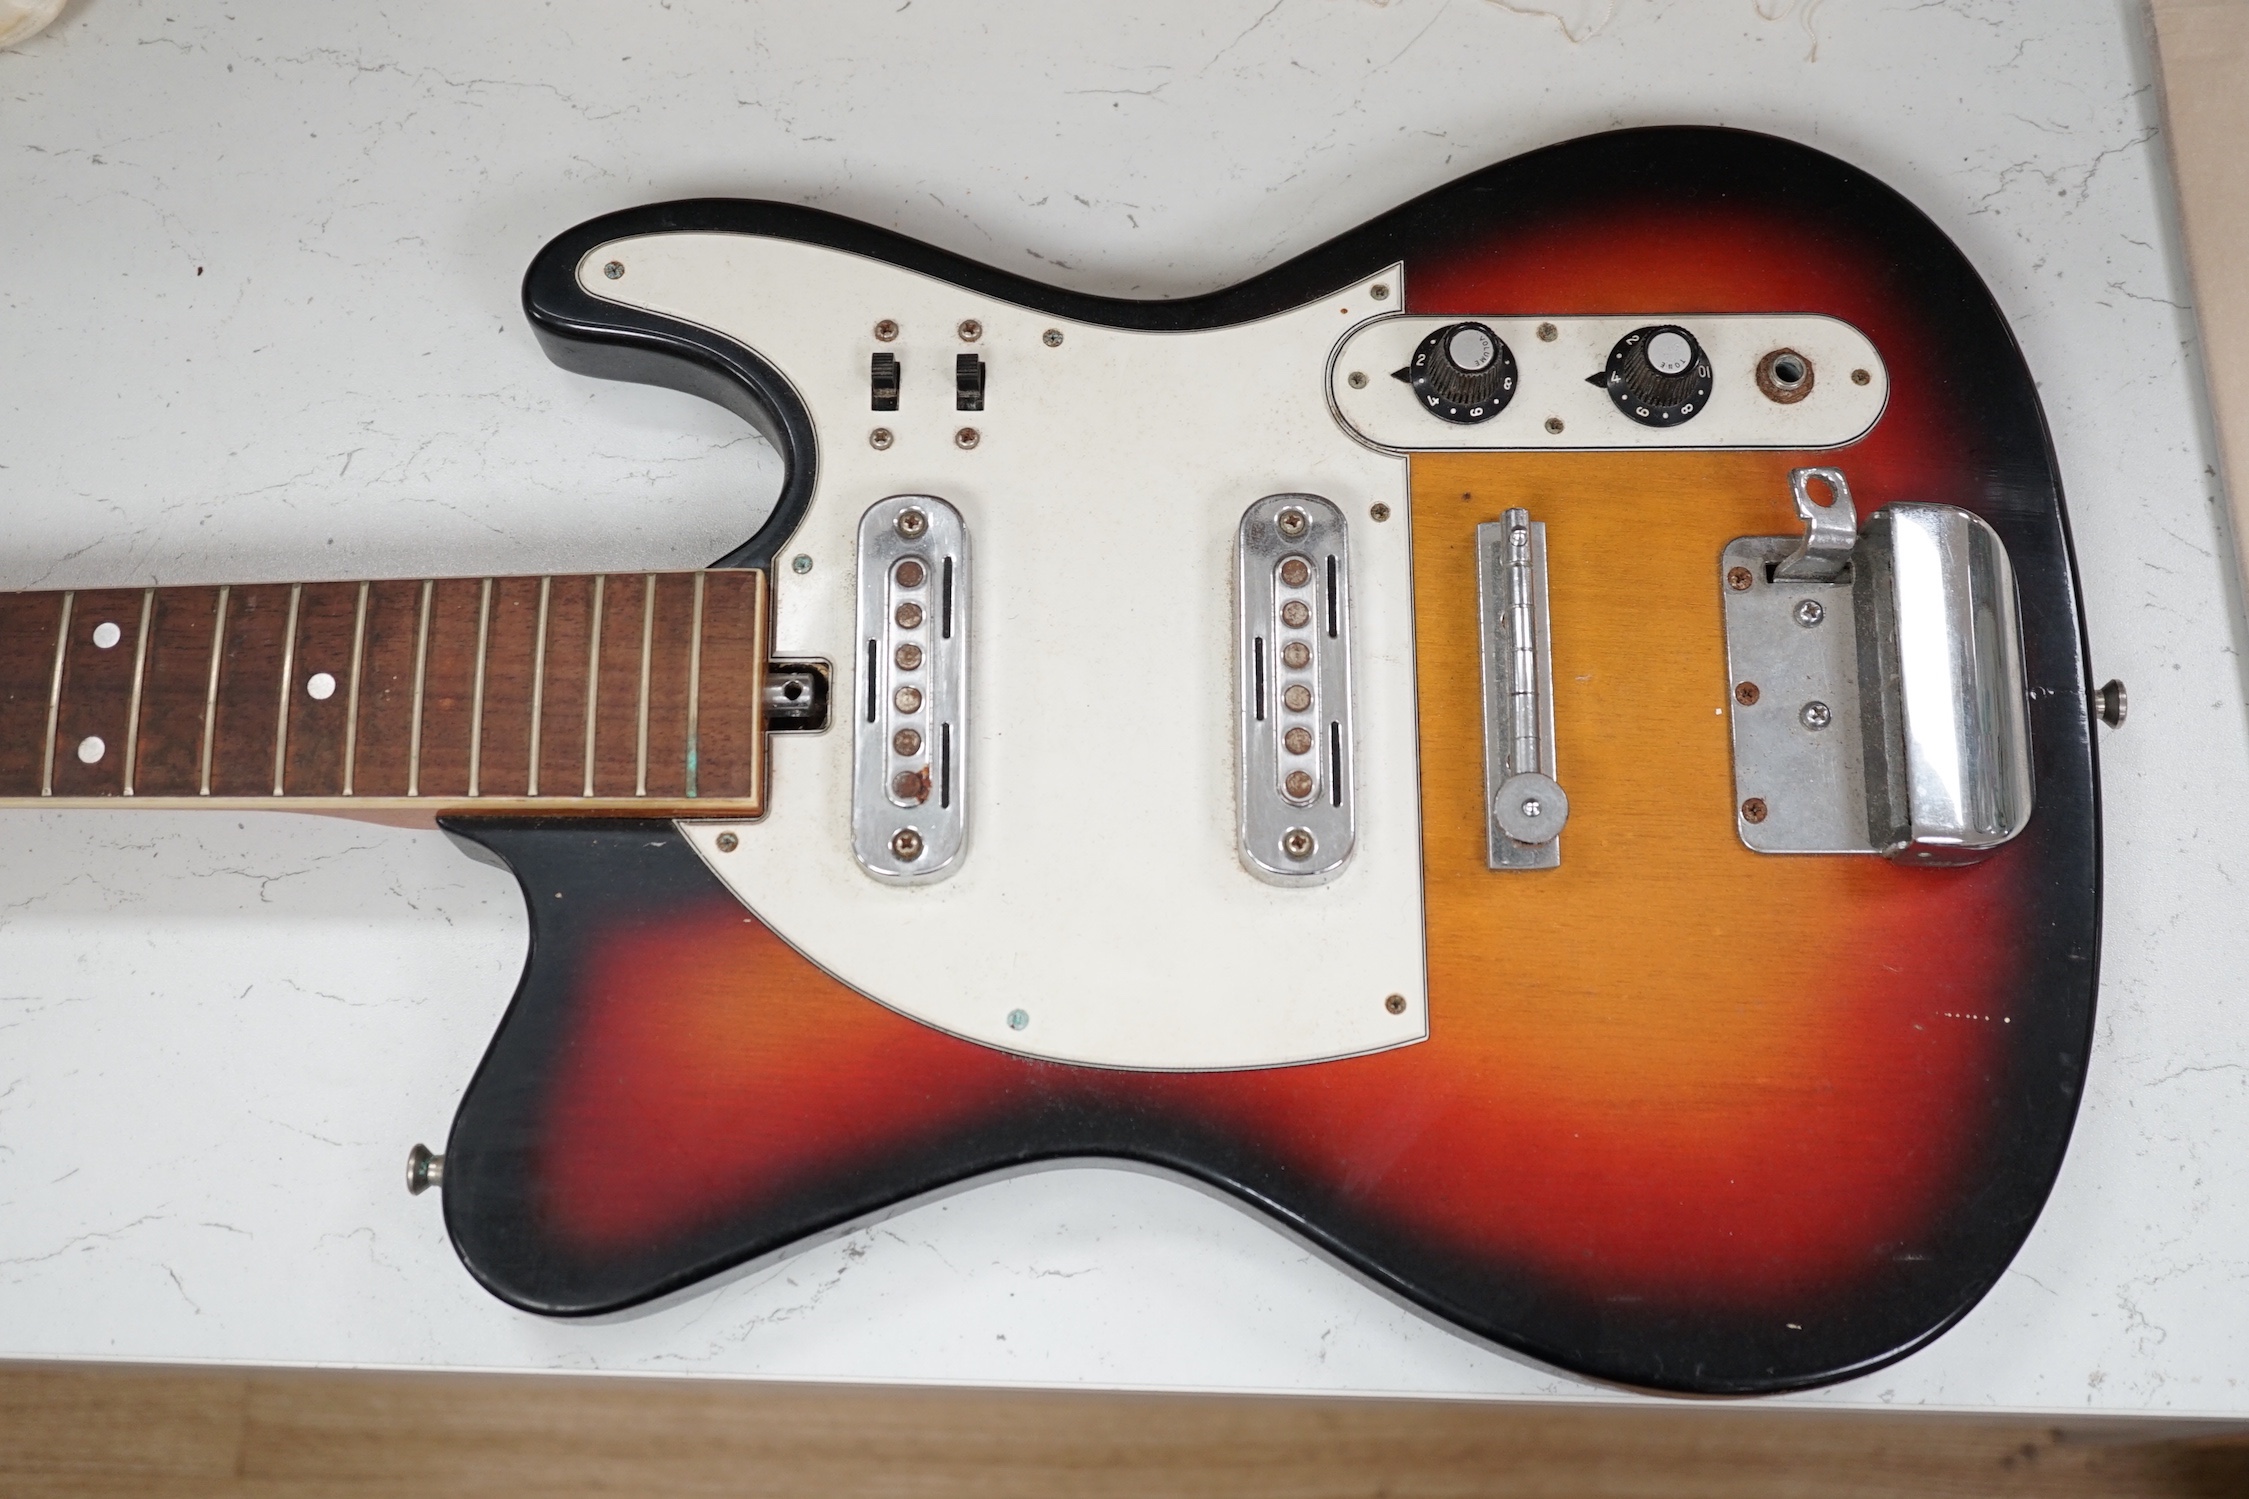 A 1970's Jepson guitar